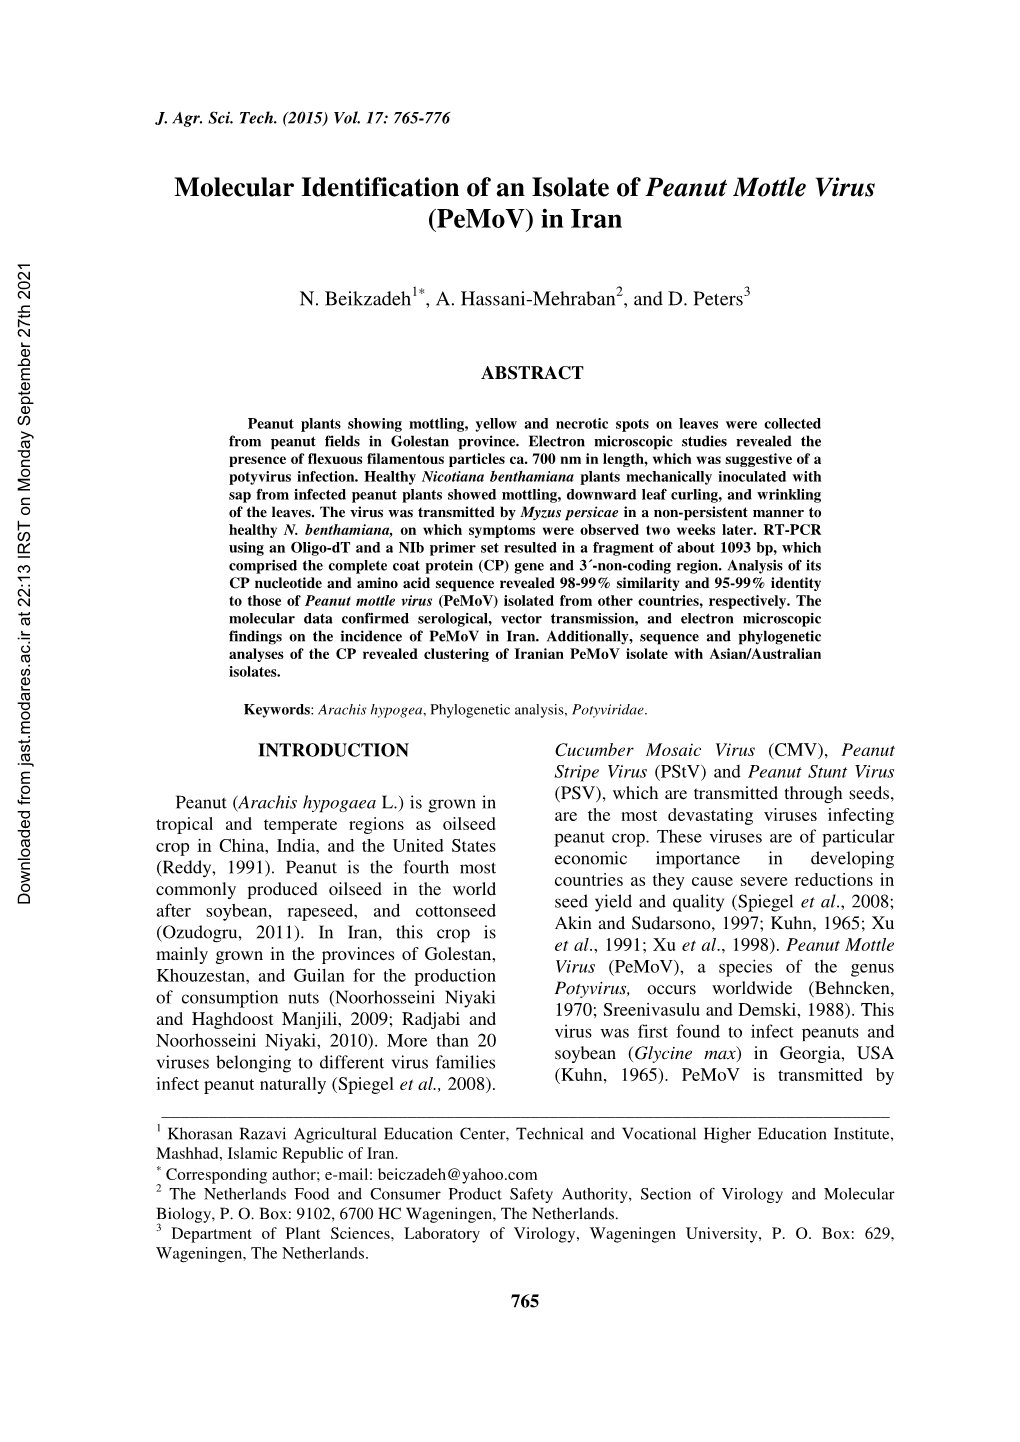 Molecular Identification of an Isolate of Peanut Mottle Virus (Pemov) in Iran